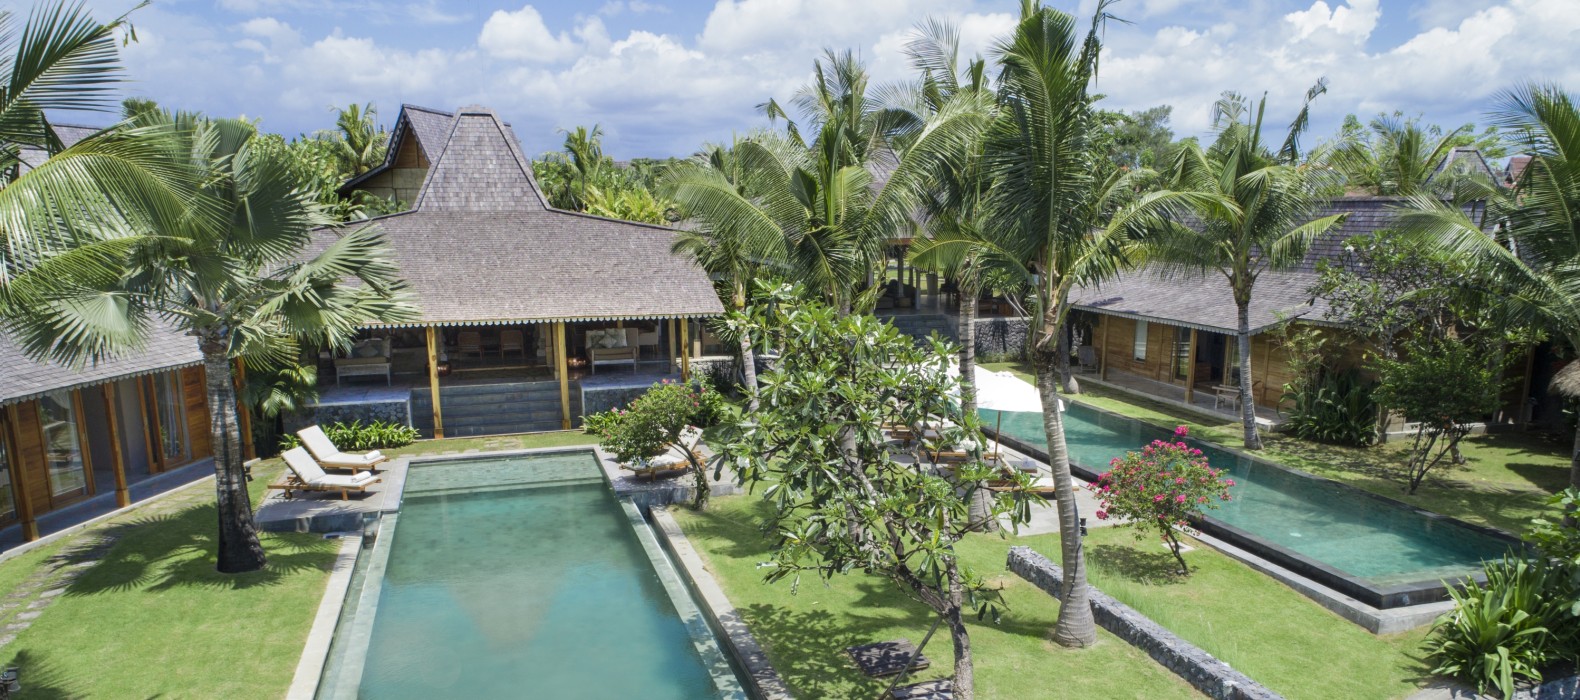 Exterior villa view of Villa Manoa Estate in Bali